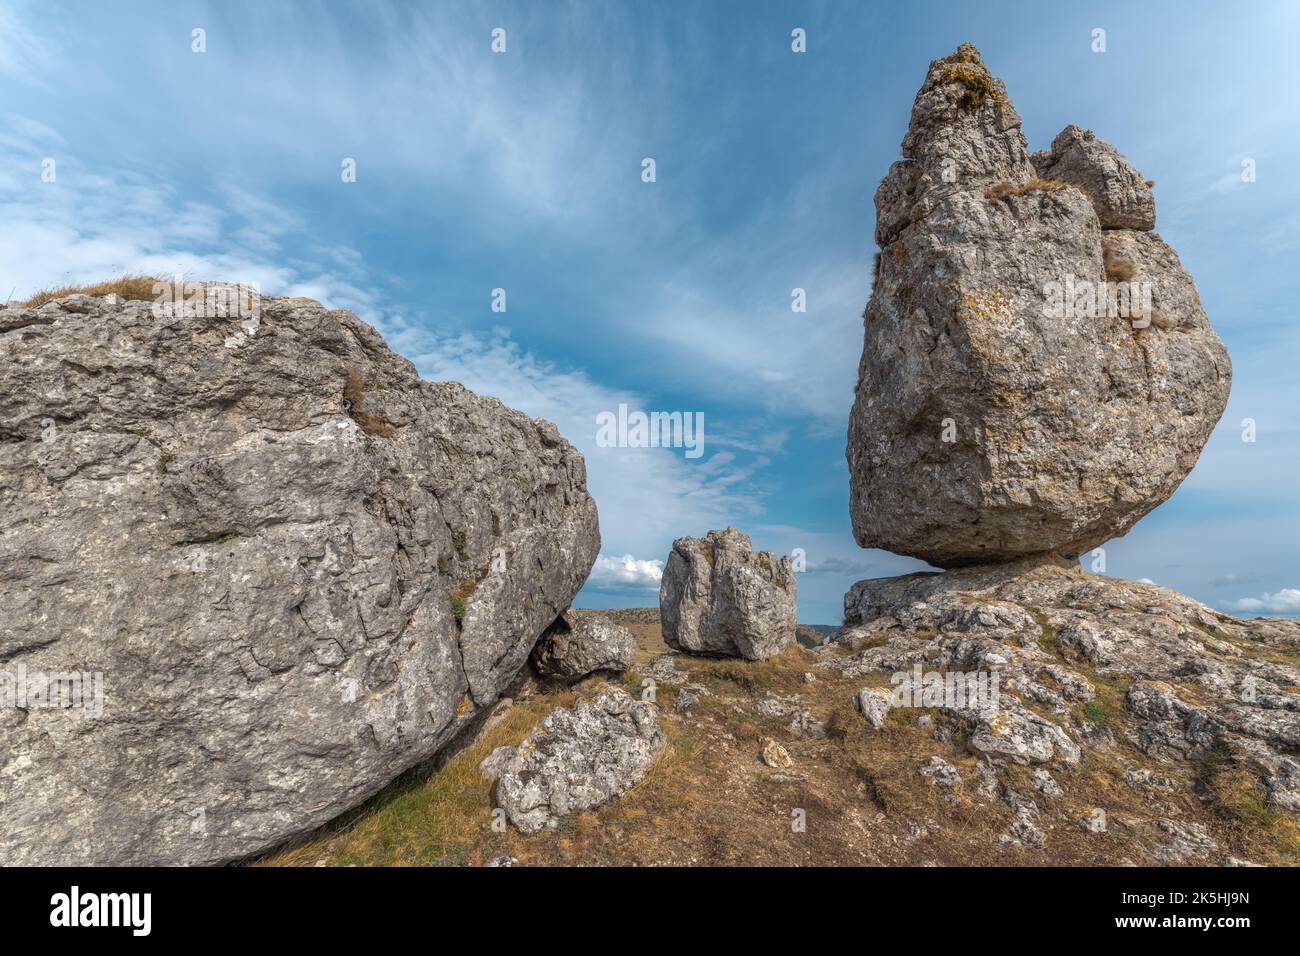 https://c8.alamy.com/comp/2K5HJ9N/strangely-shaped-rocks-in-the-chaos-of-nimes-le-vieux-in-the-cevennes-national-park-unesco-world-heritage-fraissinet-de-fourques-lozere-france-2K5HJ9N.jpg